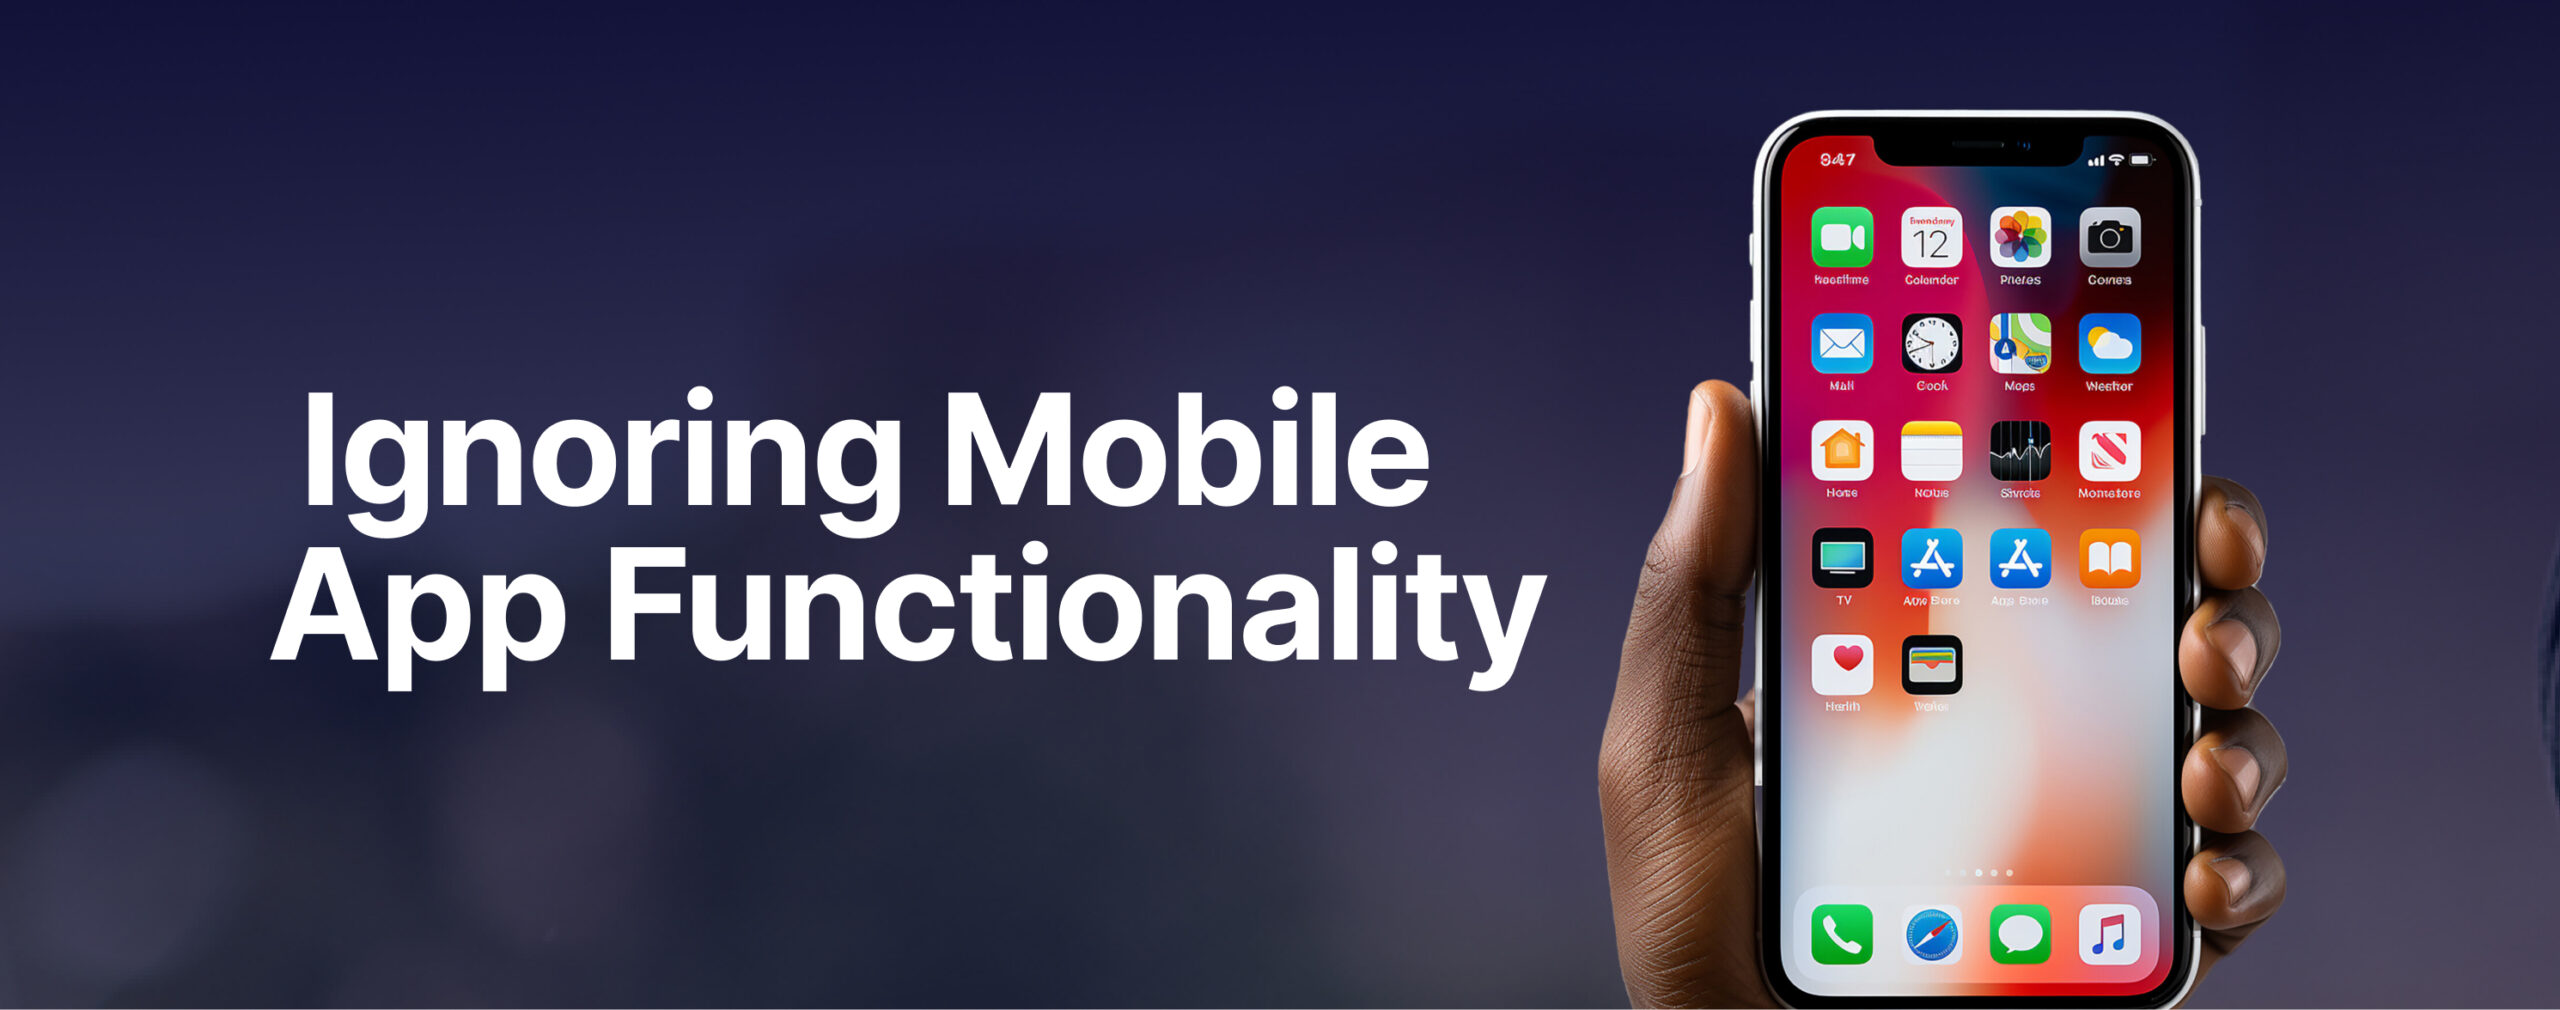 Ignoring Mobile App Functionality